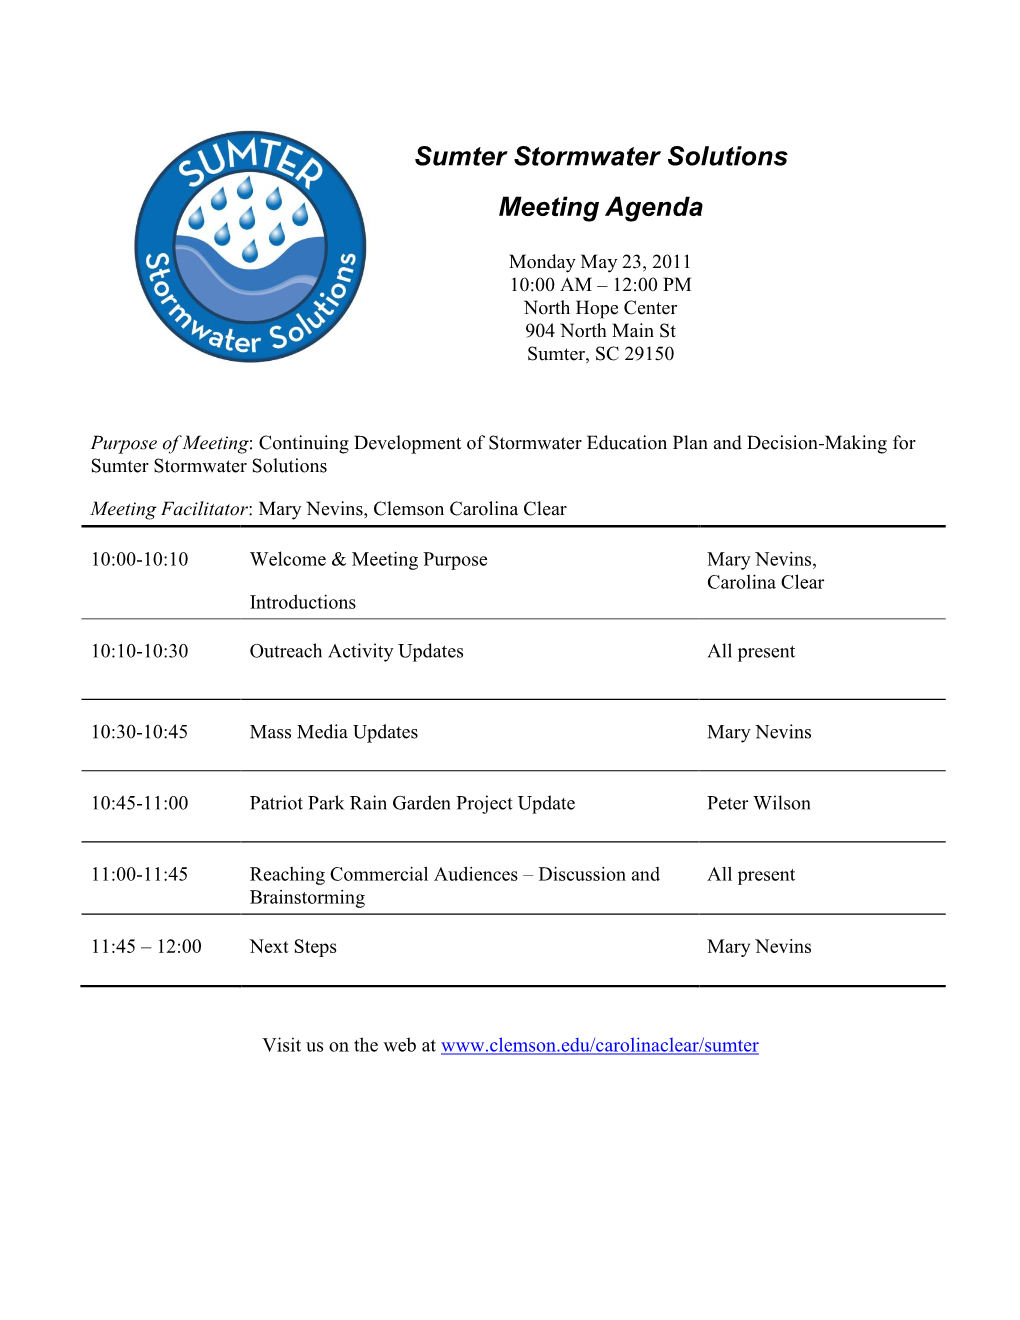 Sumter Stormwater Solutions Meeting Agenda